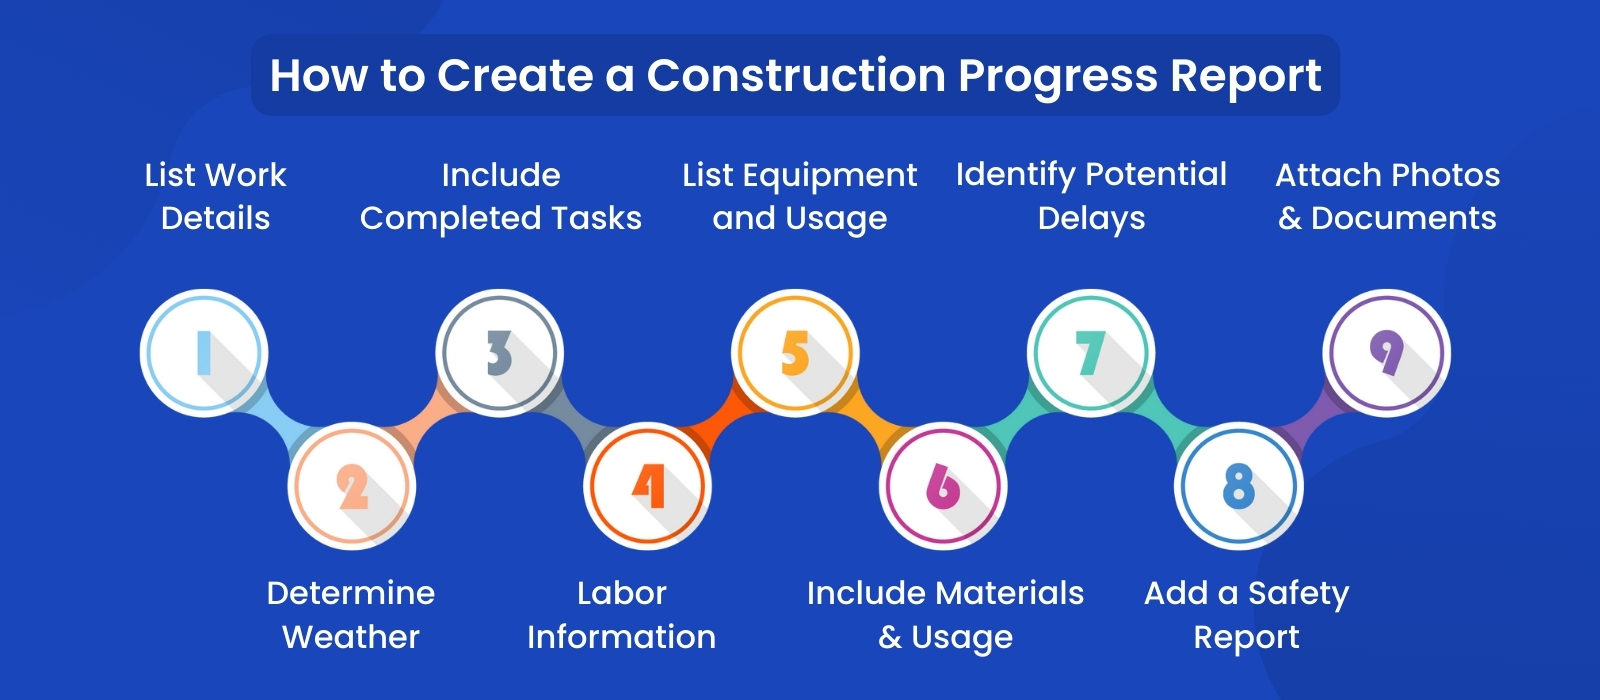 Create a Construction Progress Report 